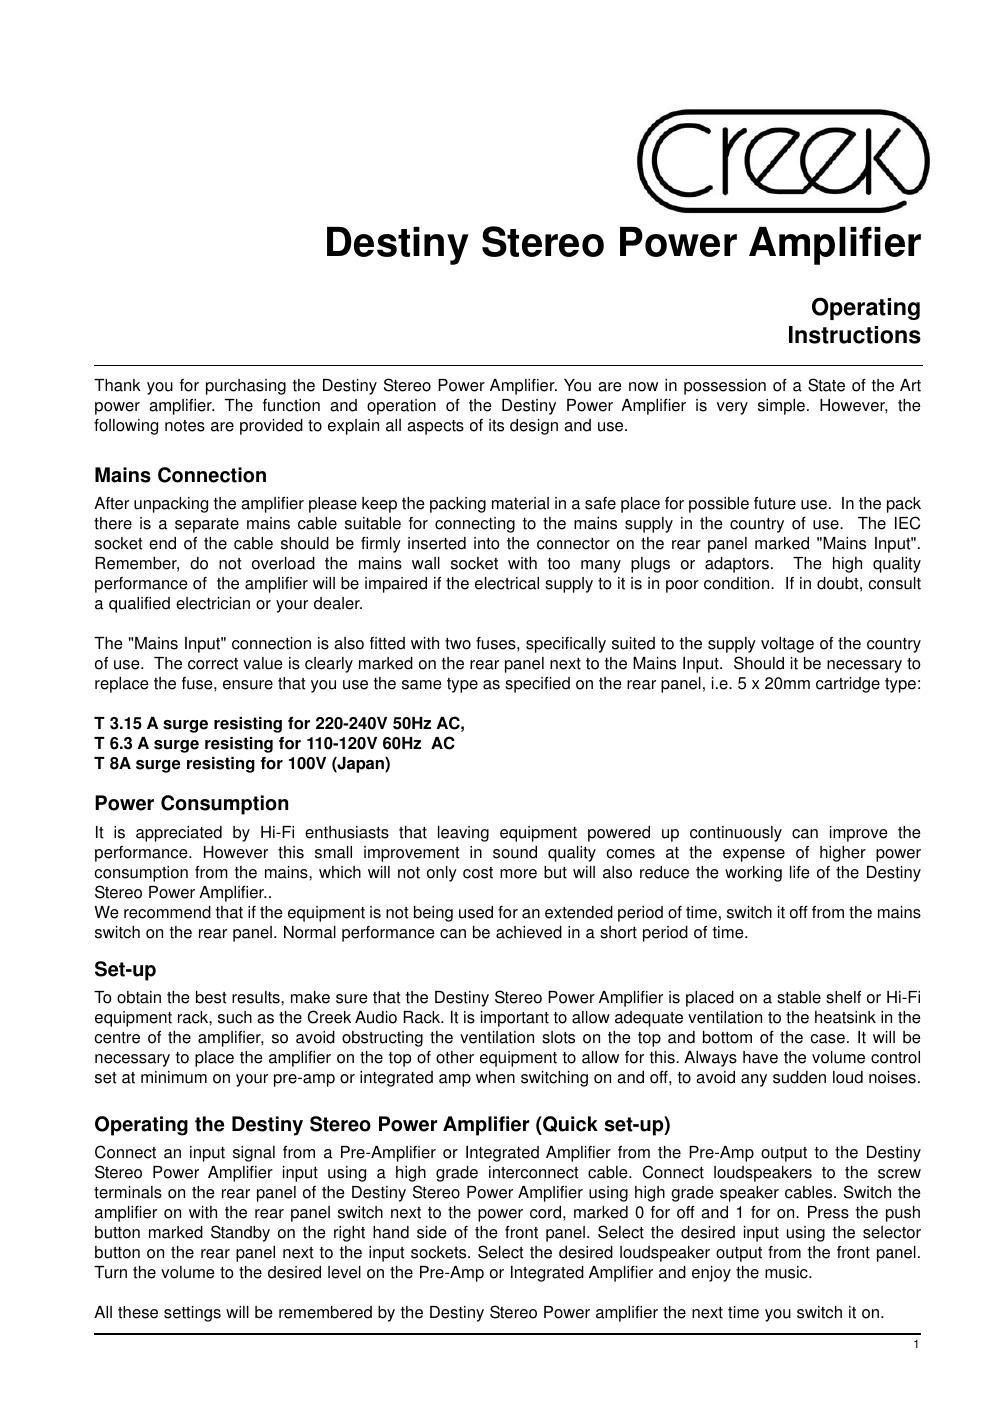 creek destiny power amp owners manual